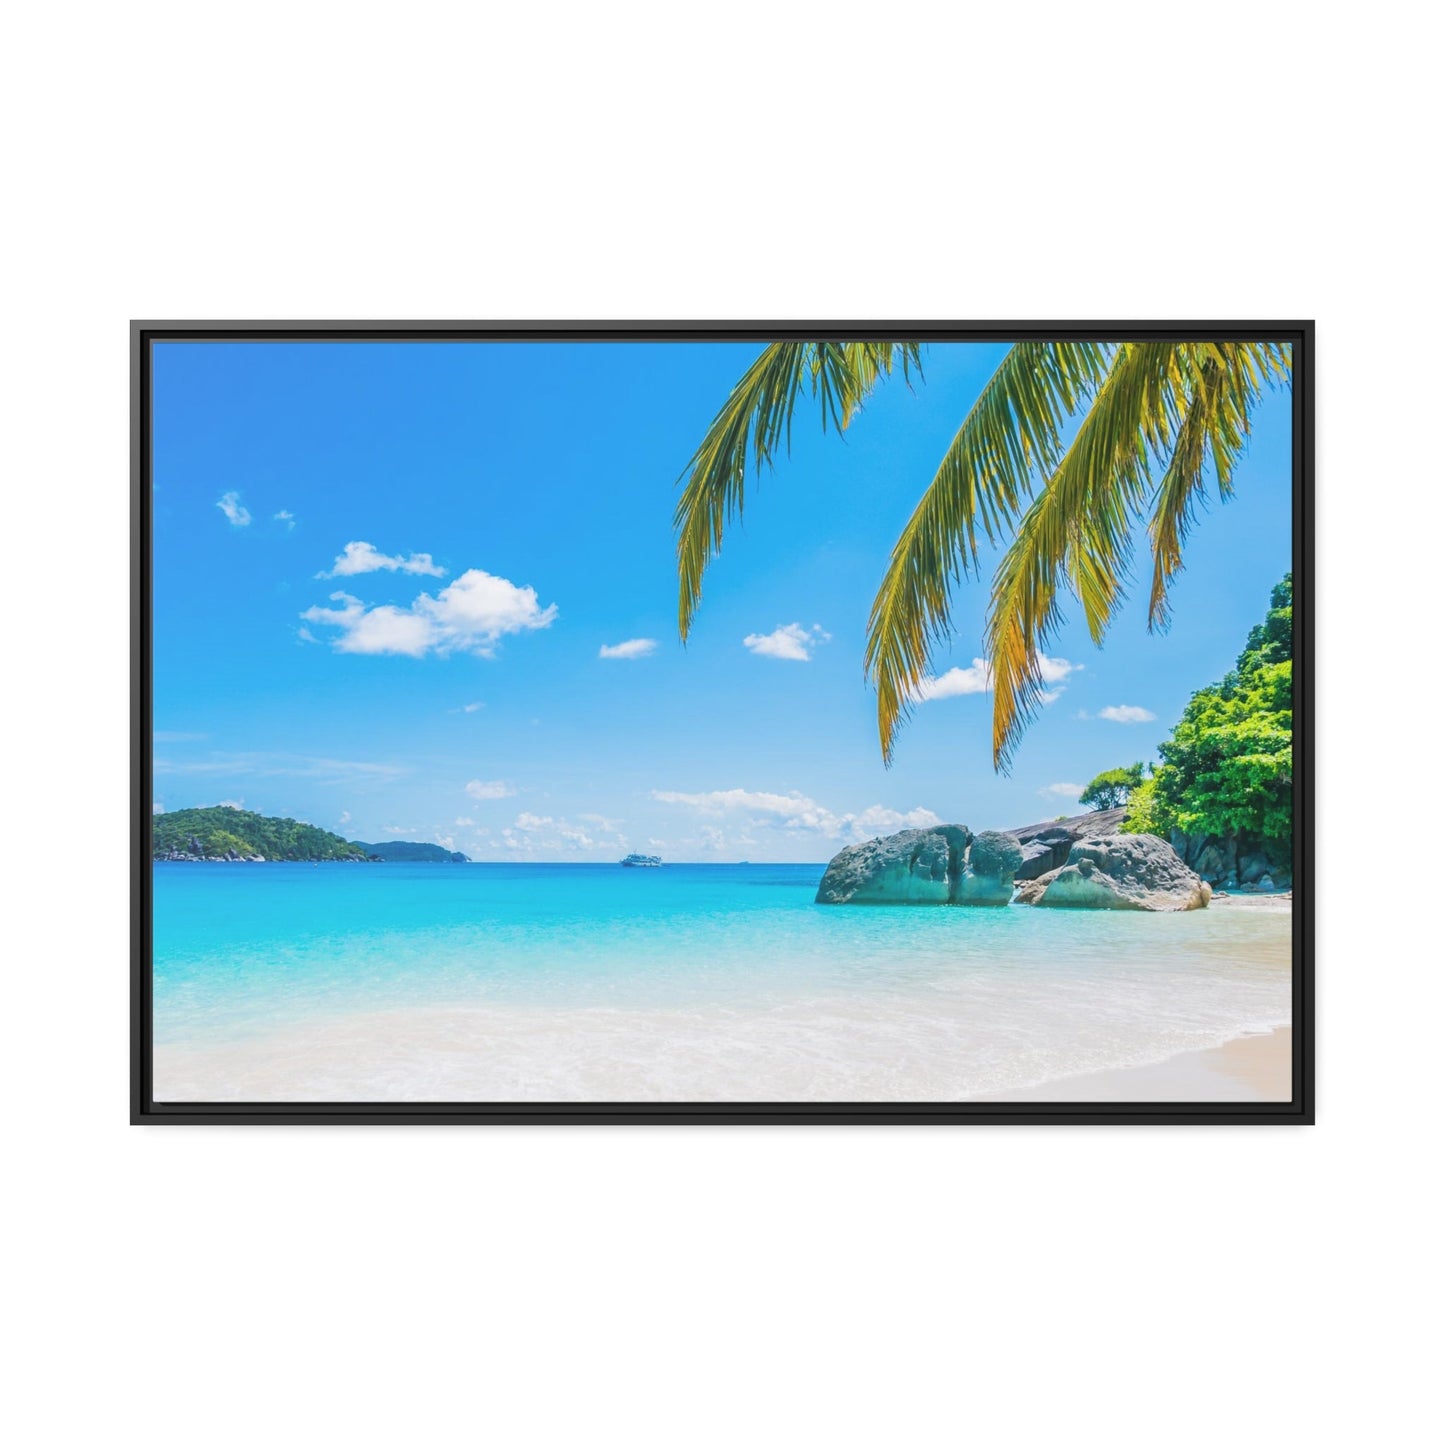 Island Getaway: Framed Canvas of a Secluded Beach on an Island